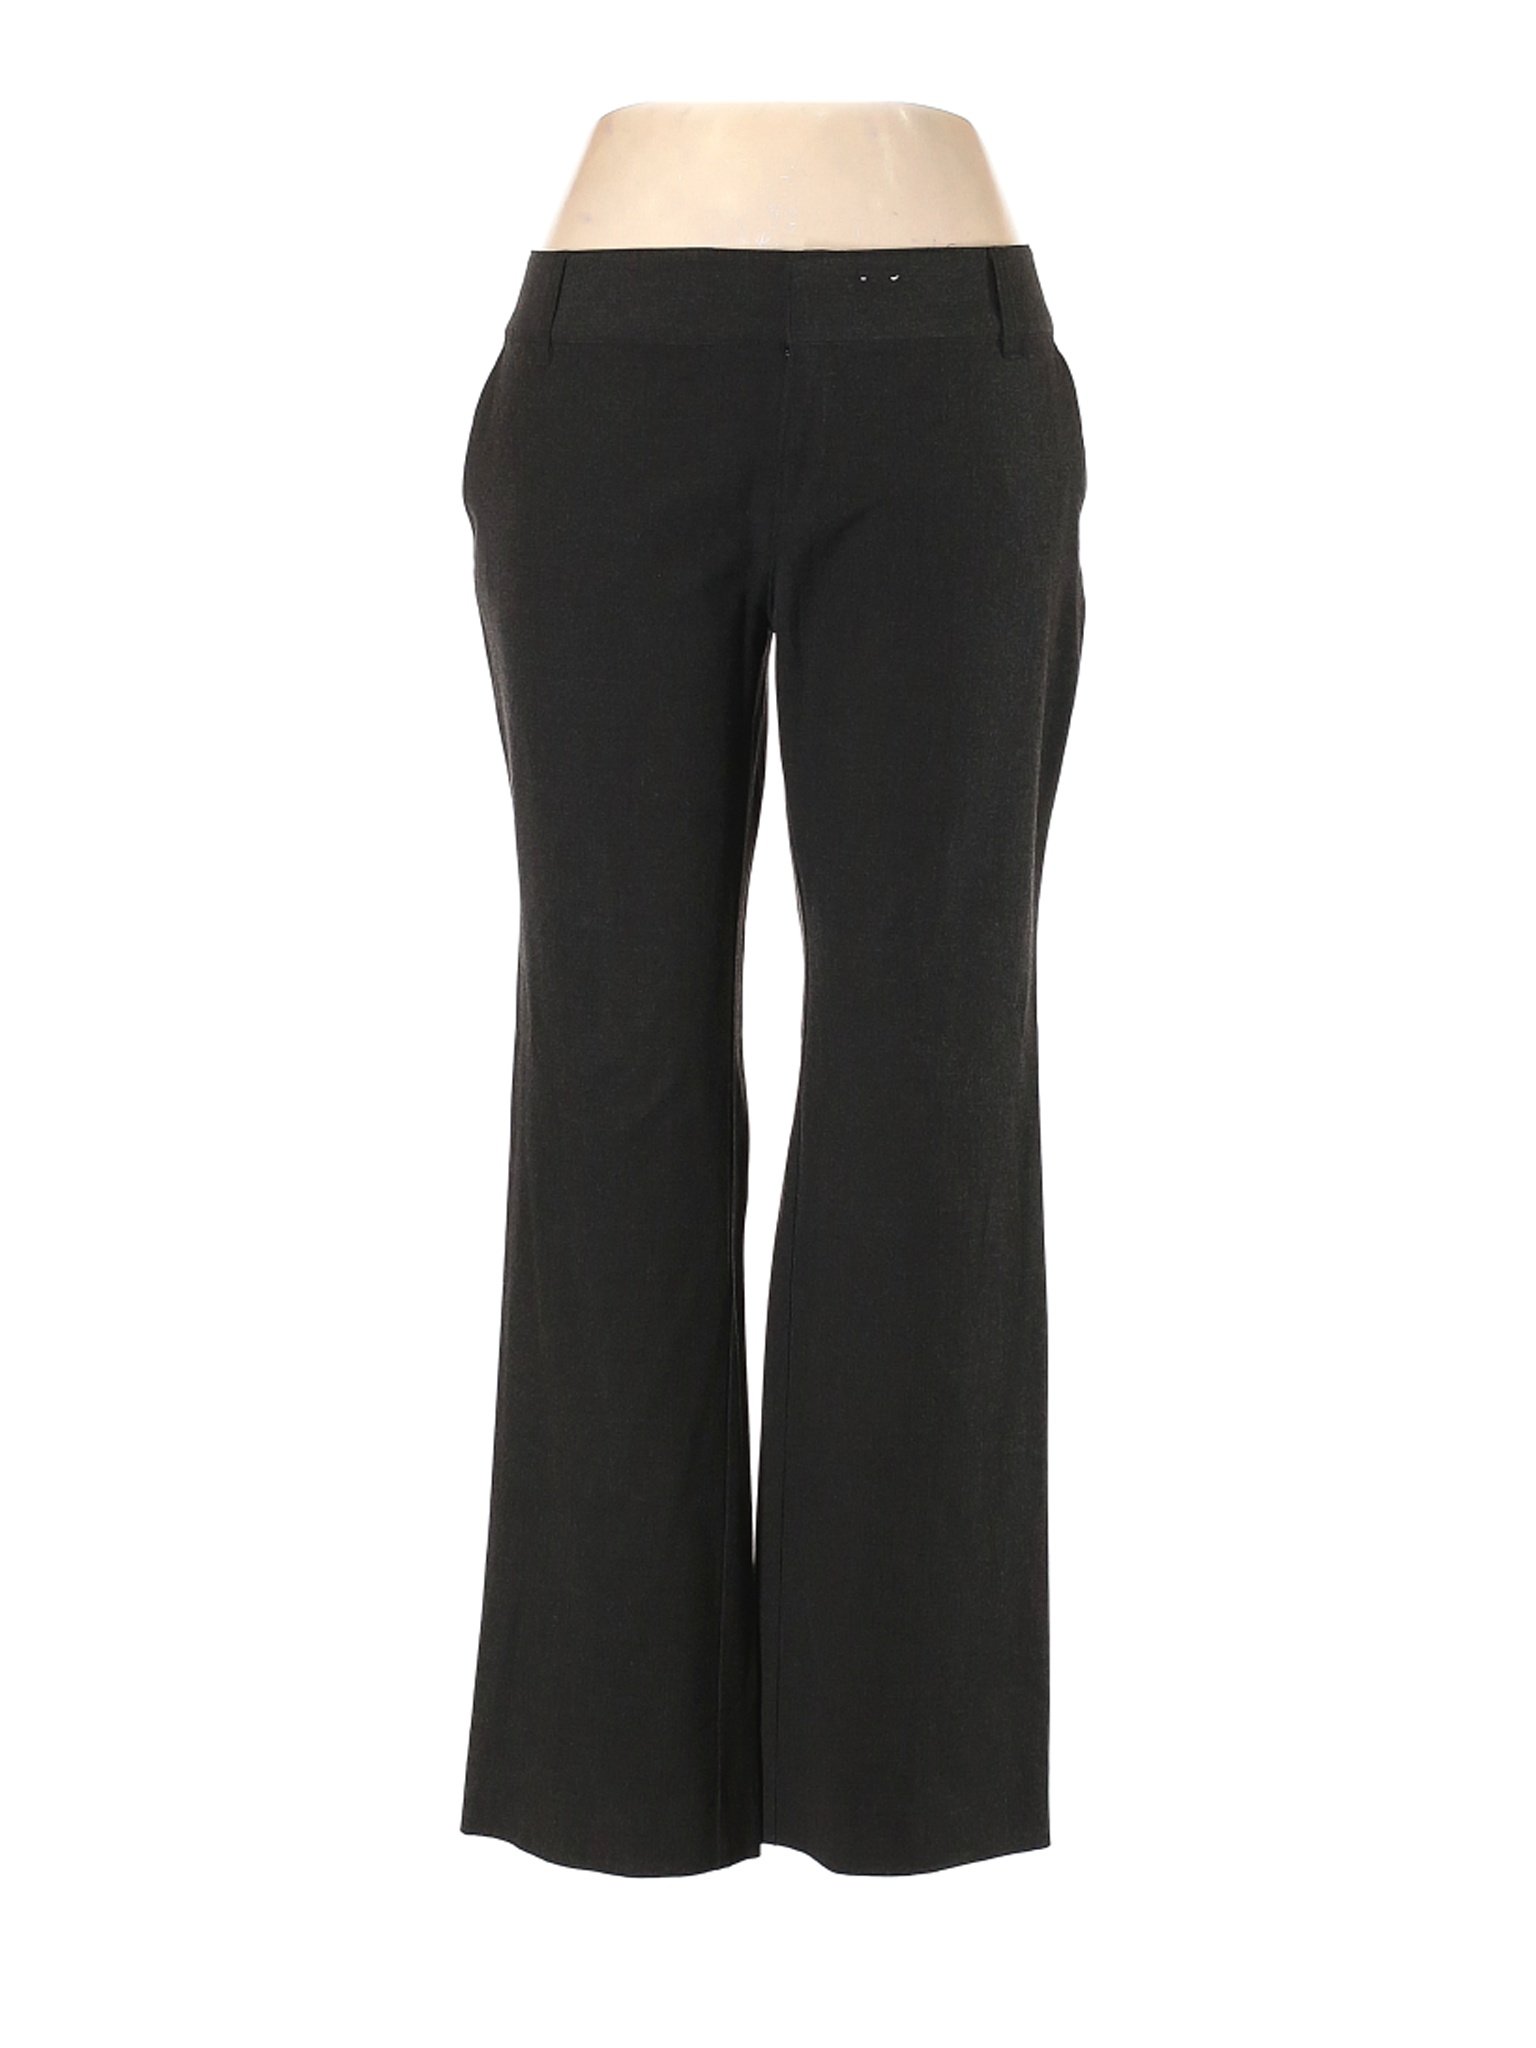 Old Navy Women Black Dress Pants 10 | eBay